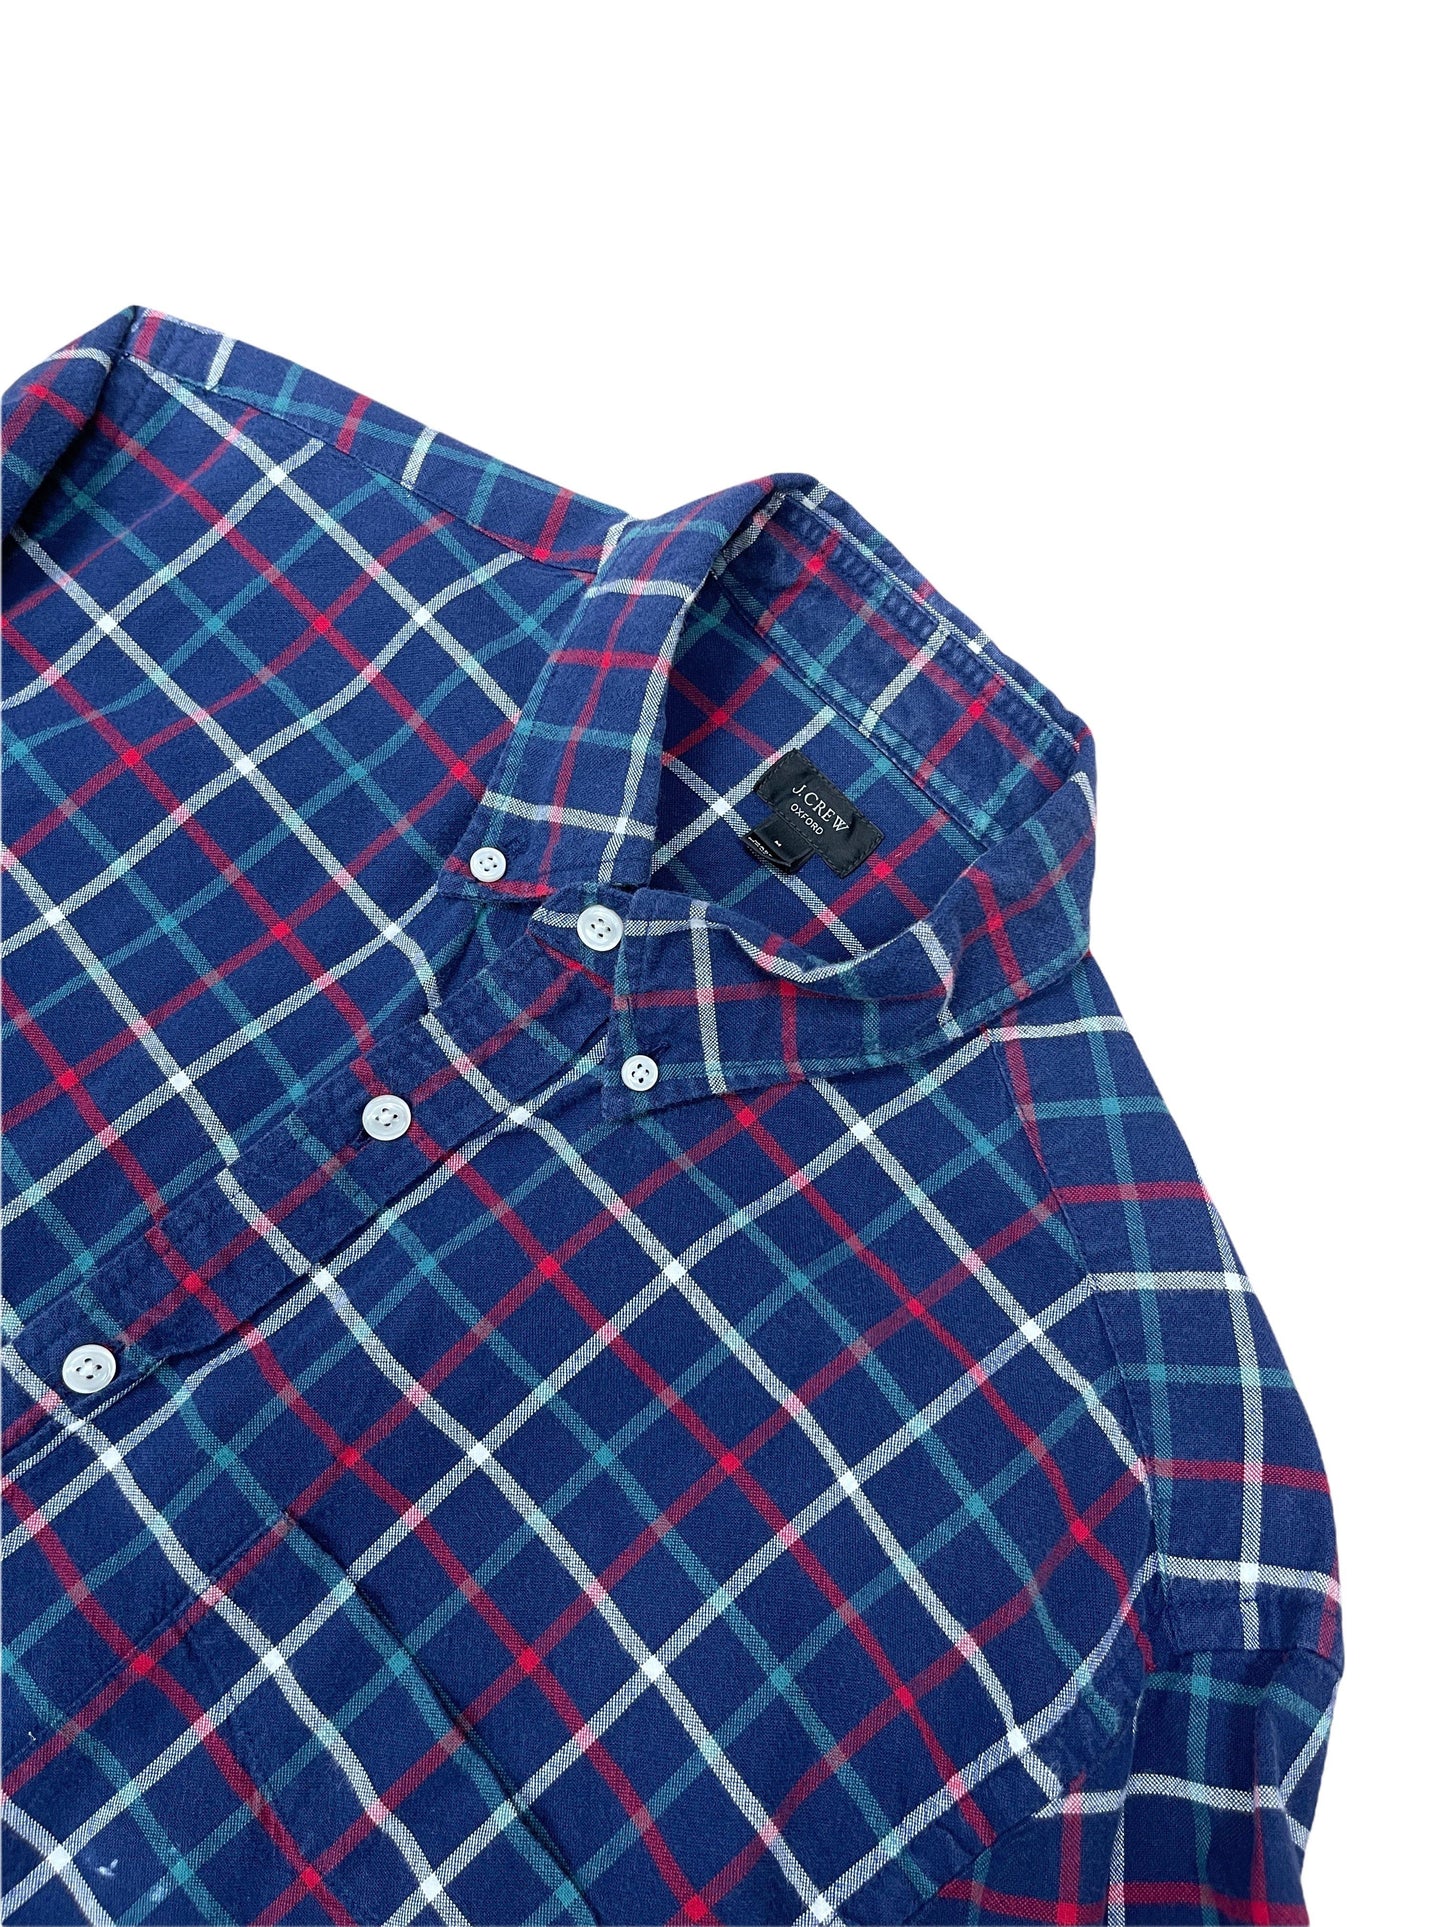 J. Crew Blue Plaid Flannel Button Down Shirt - Medium Genuine Design luxury consignment